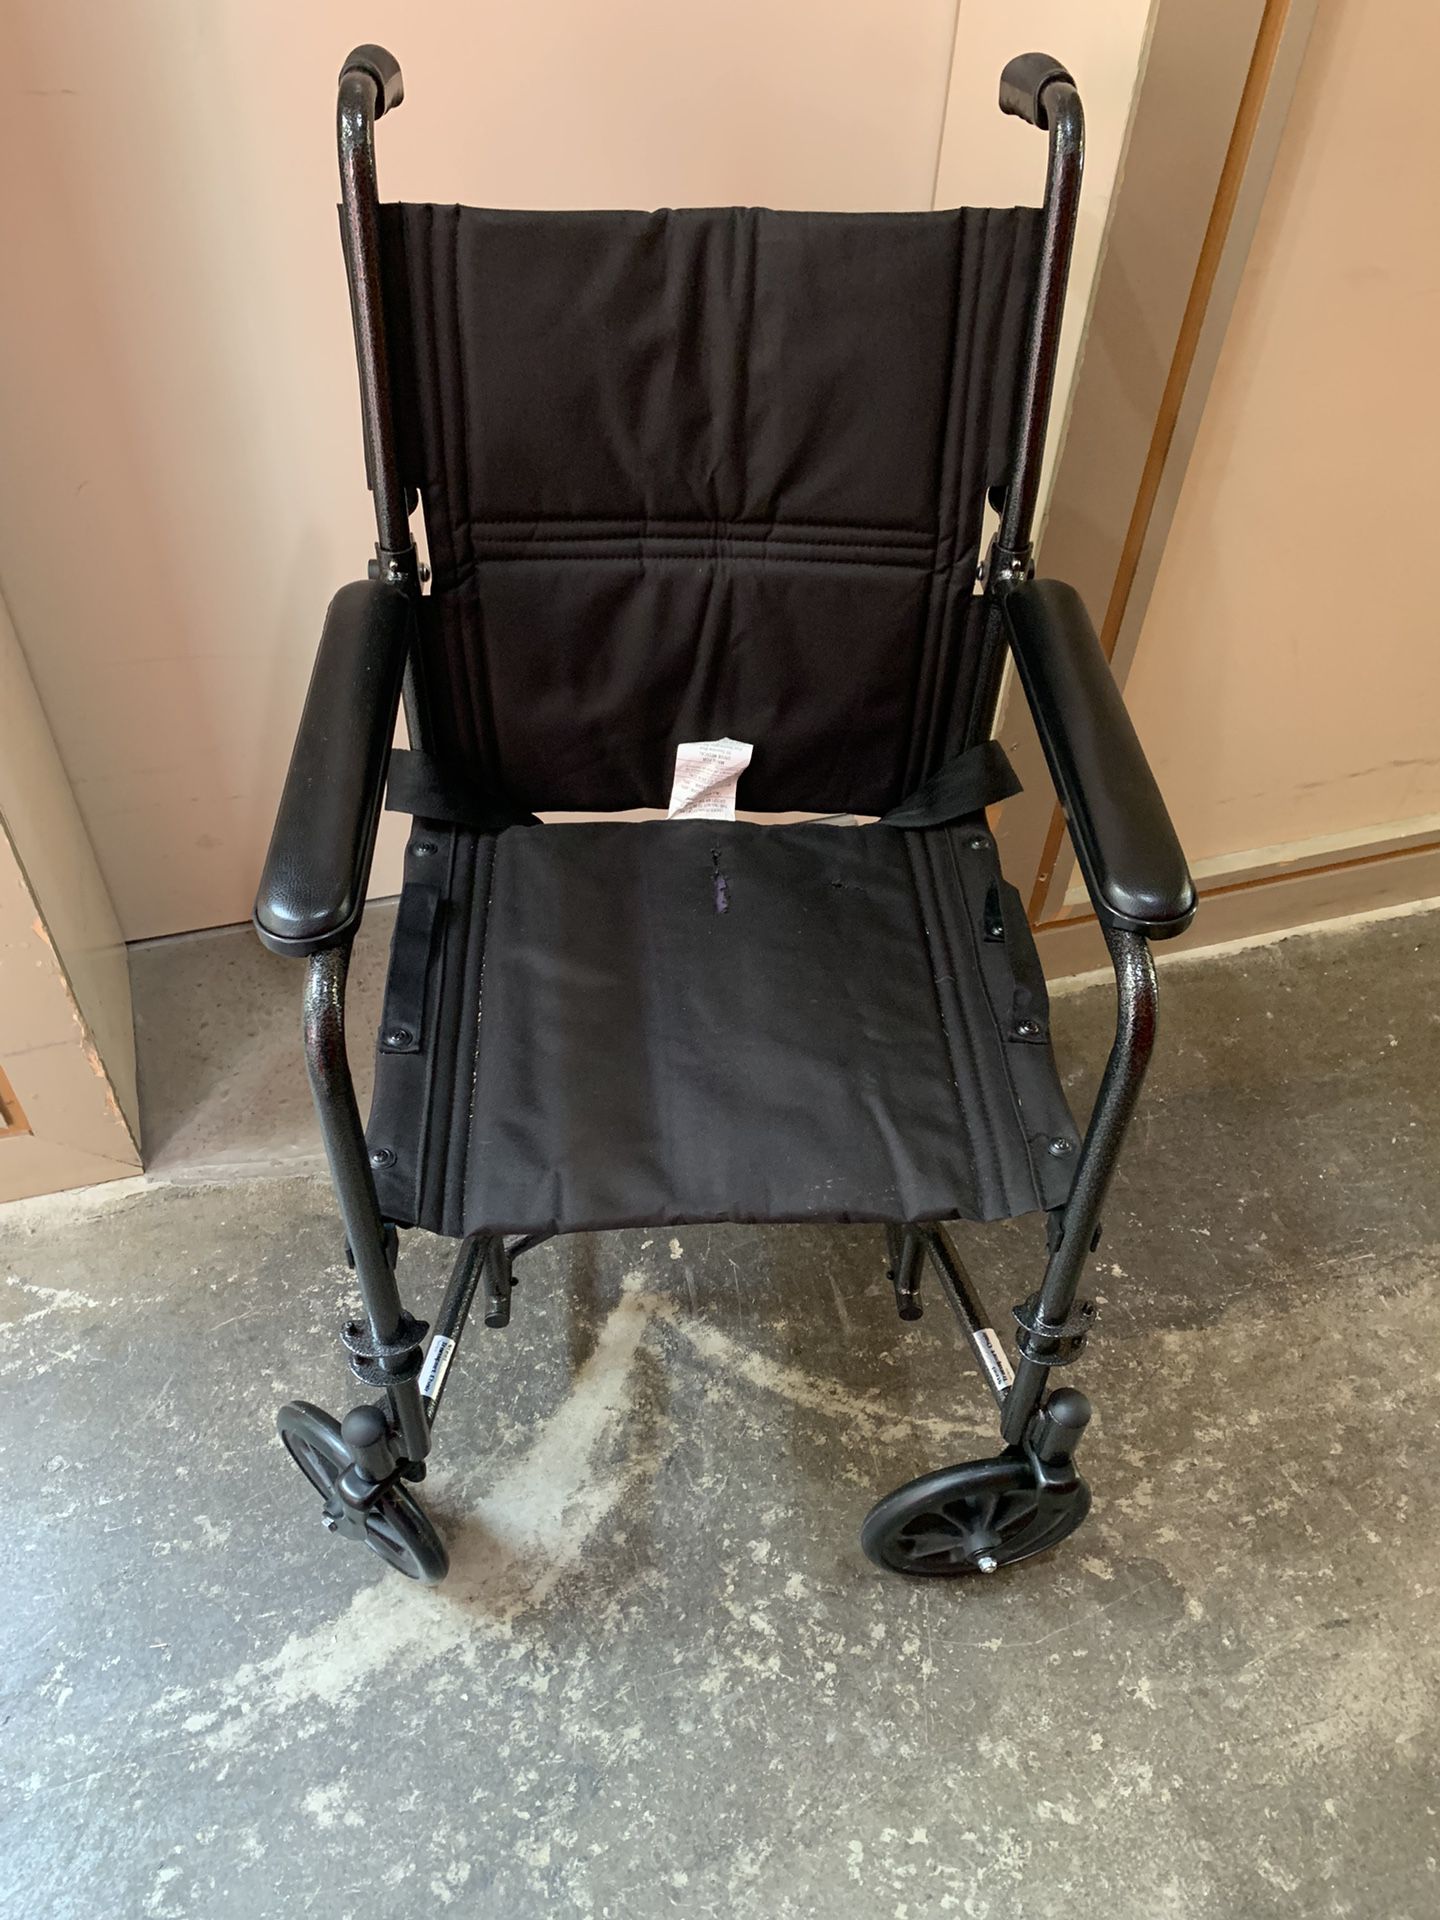 Wheel Chair - No Leg Supports $10 - Totowa